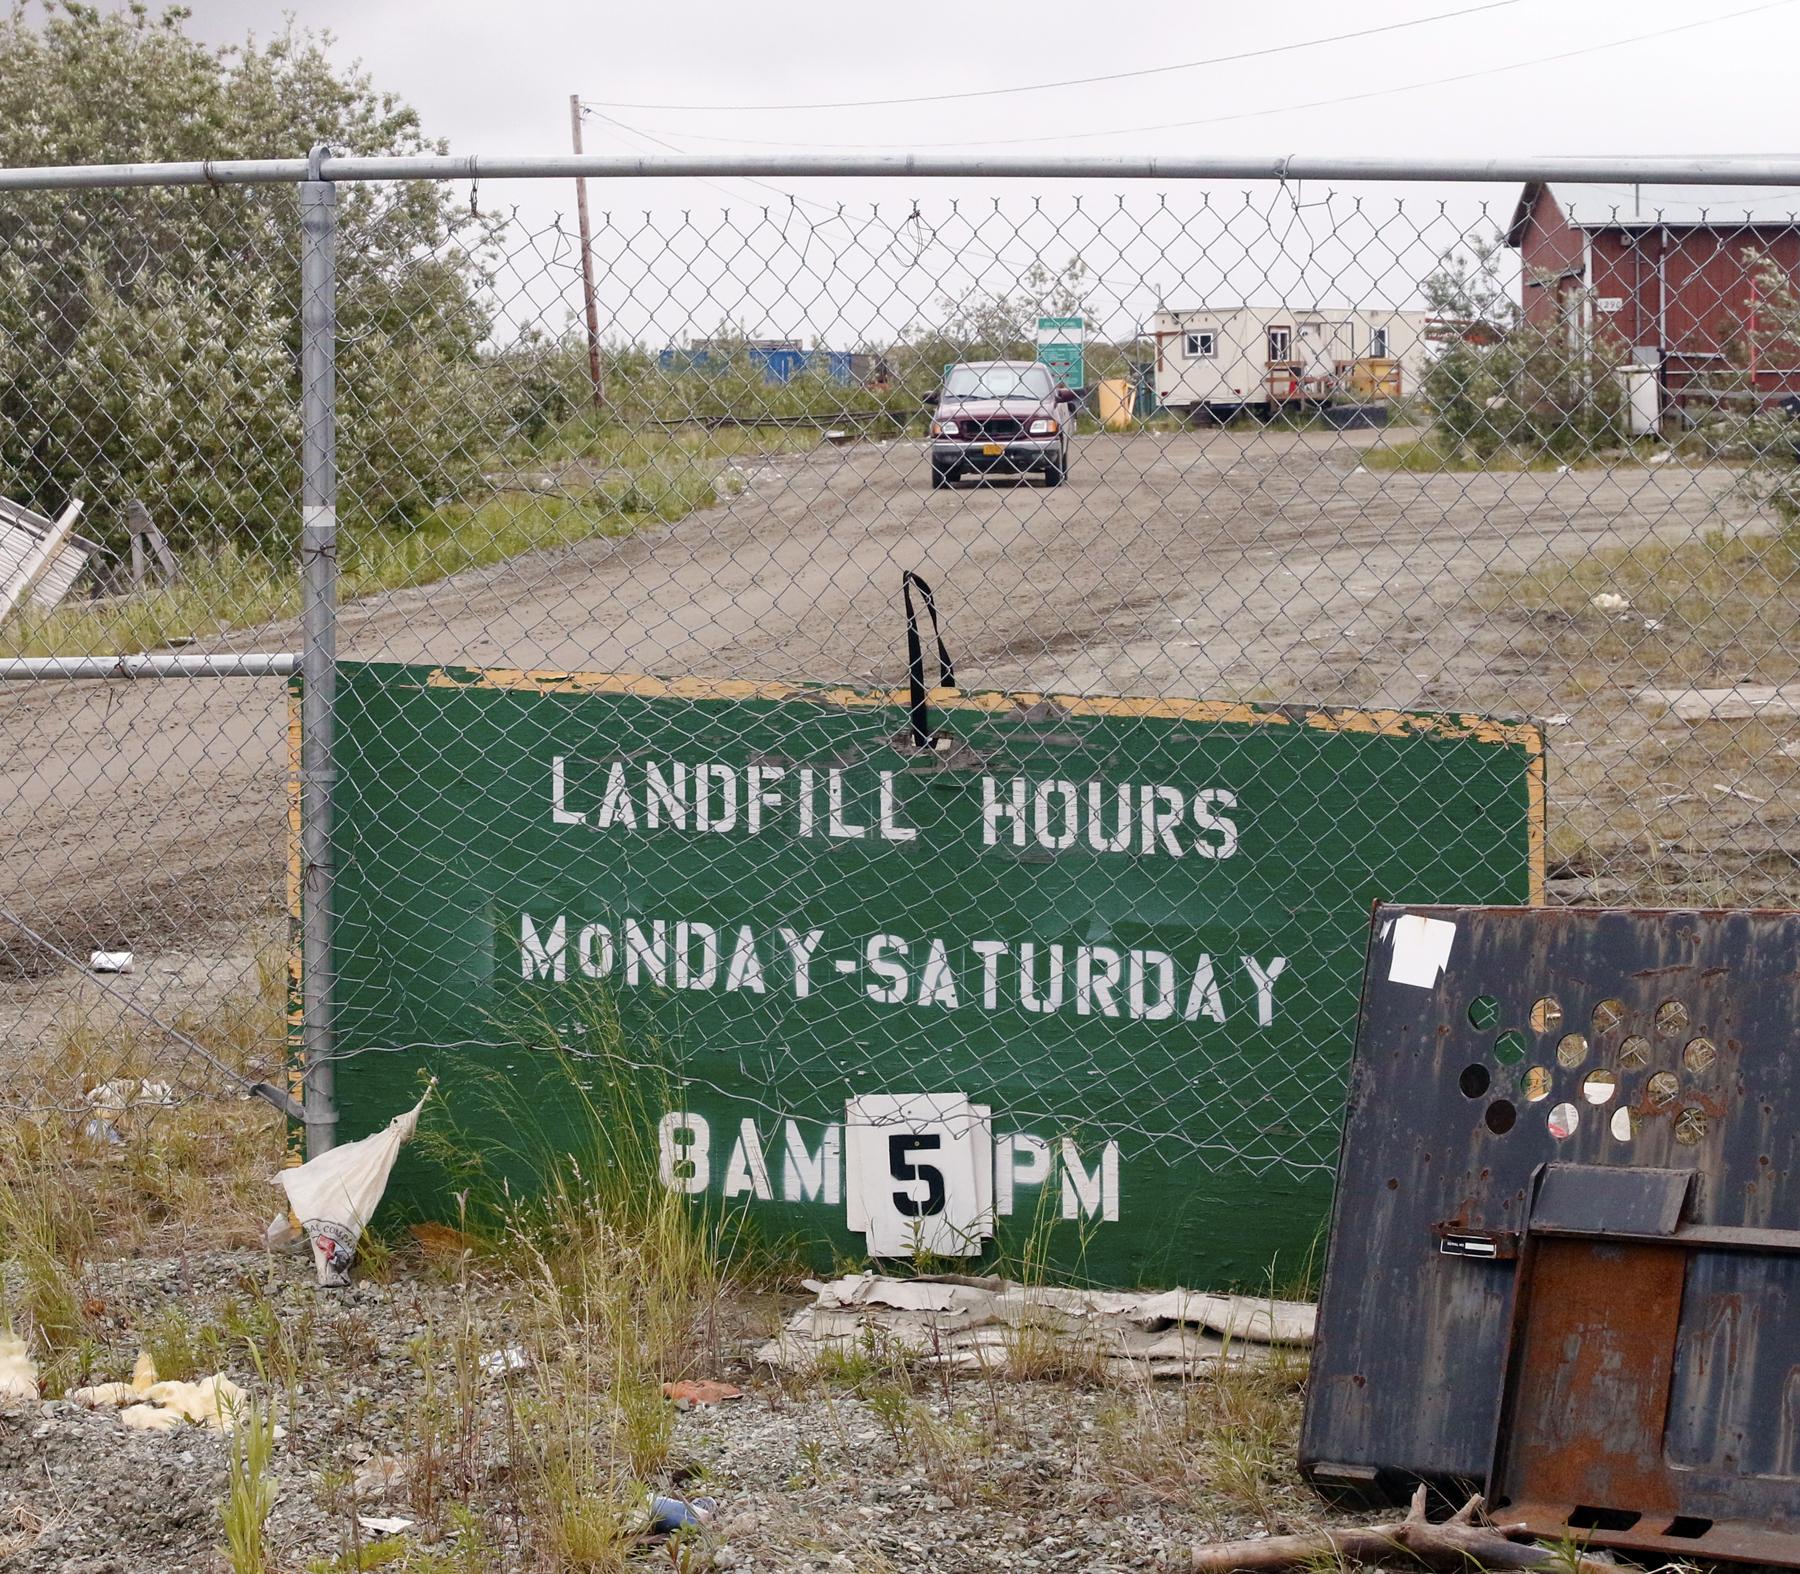 Entrance to the Bethel landfill (Photo by Dean Swope, KYUK - Bethel)